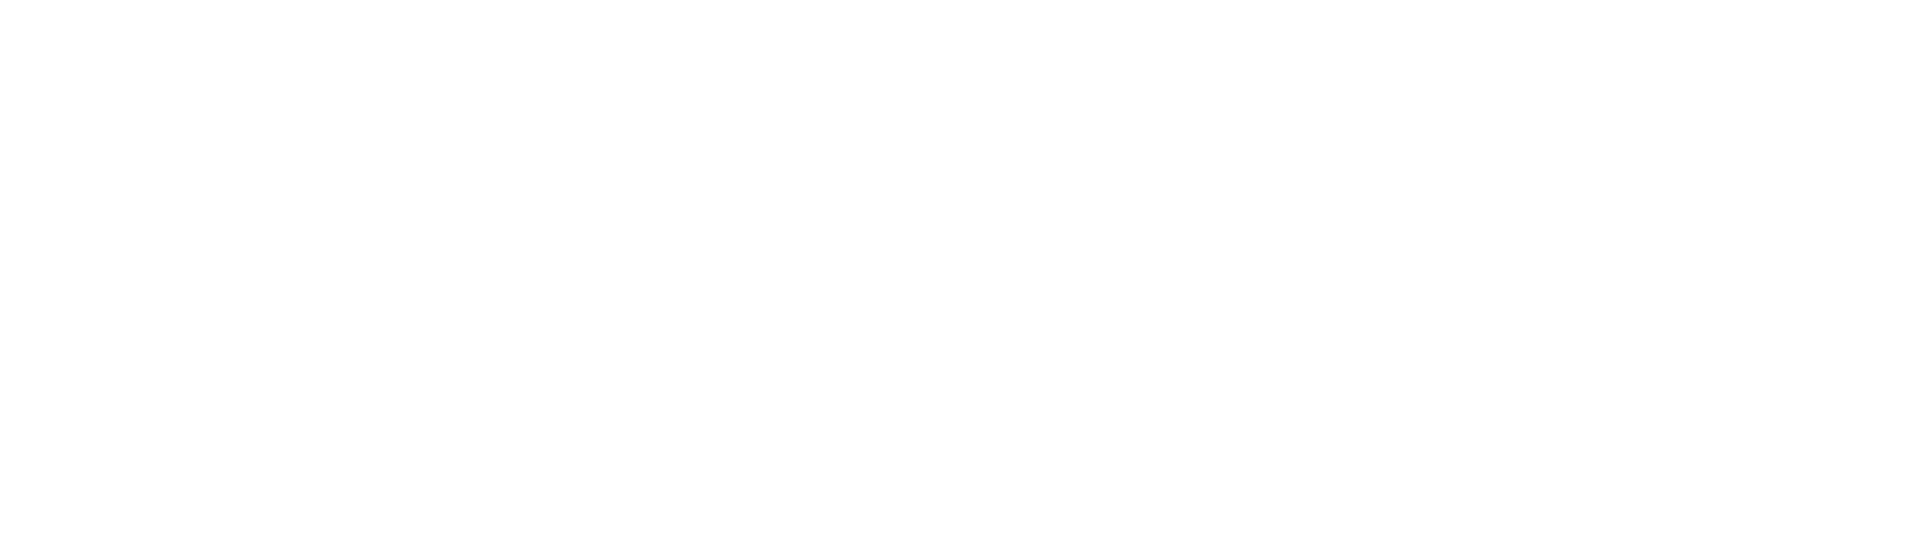 Santander Logo White